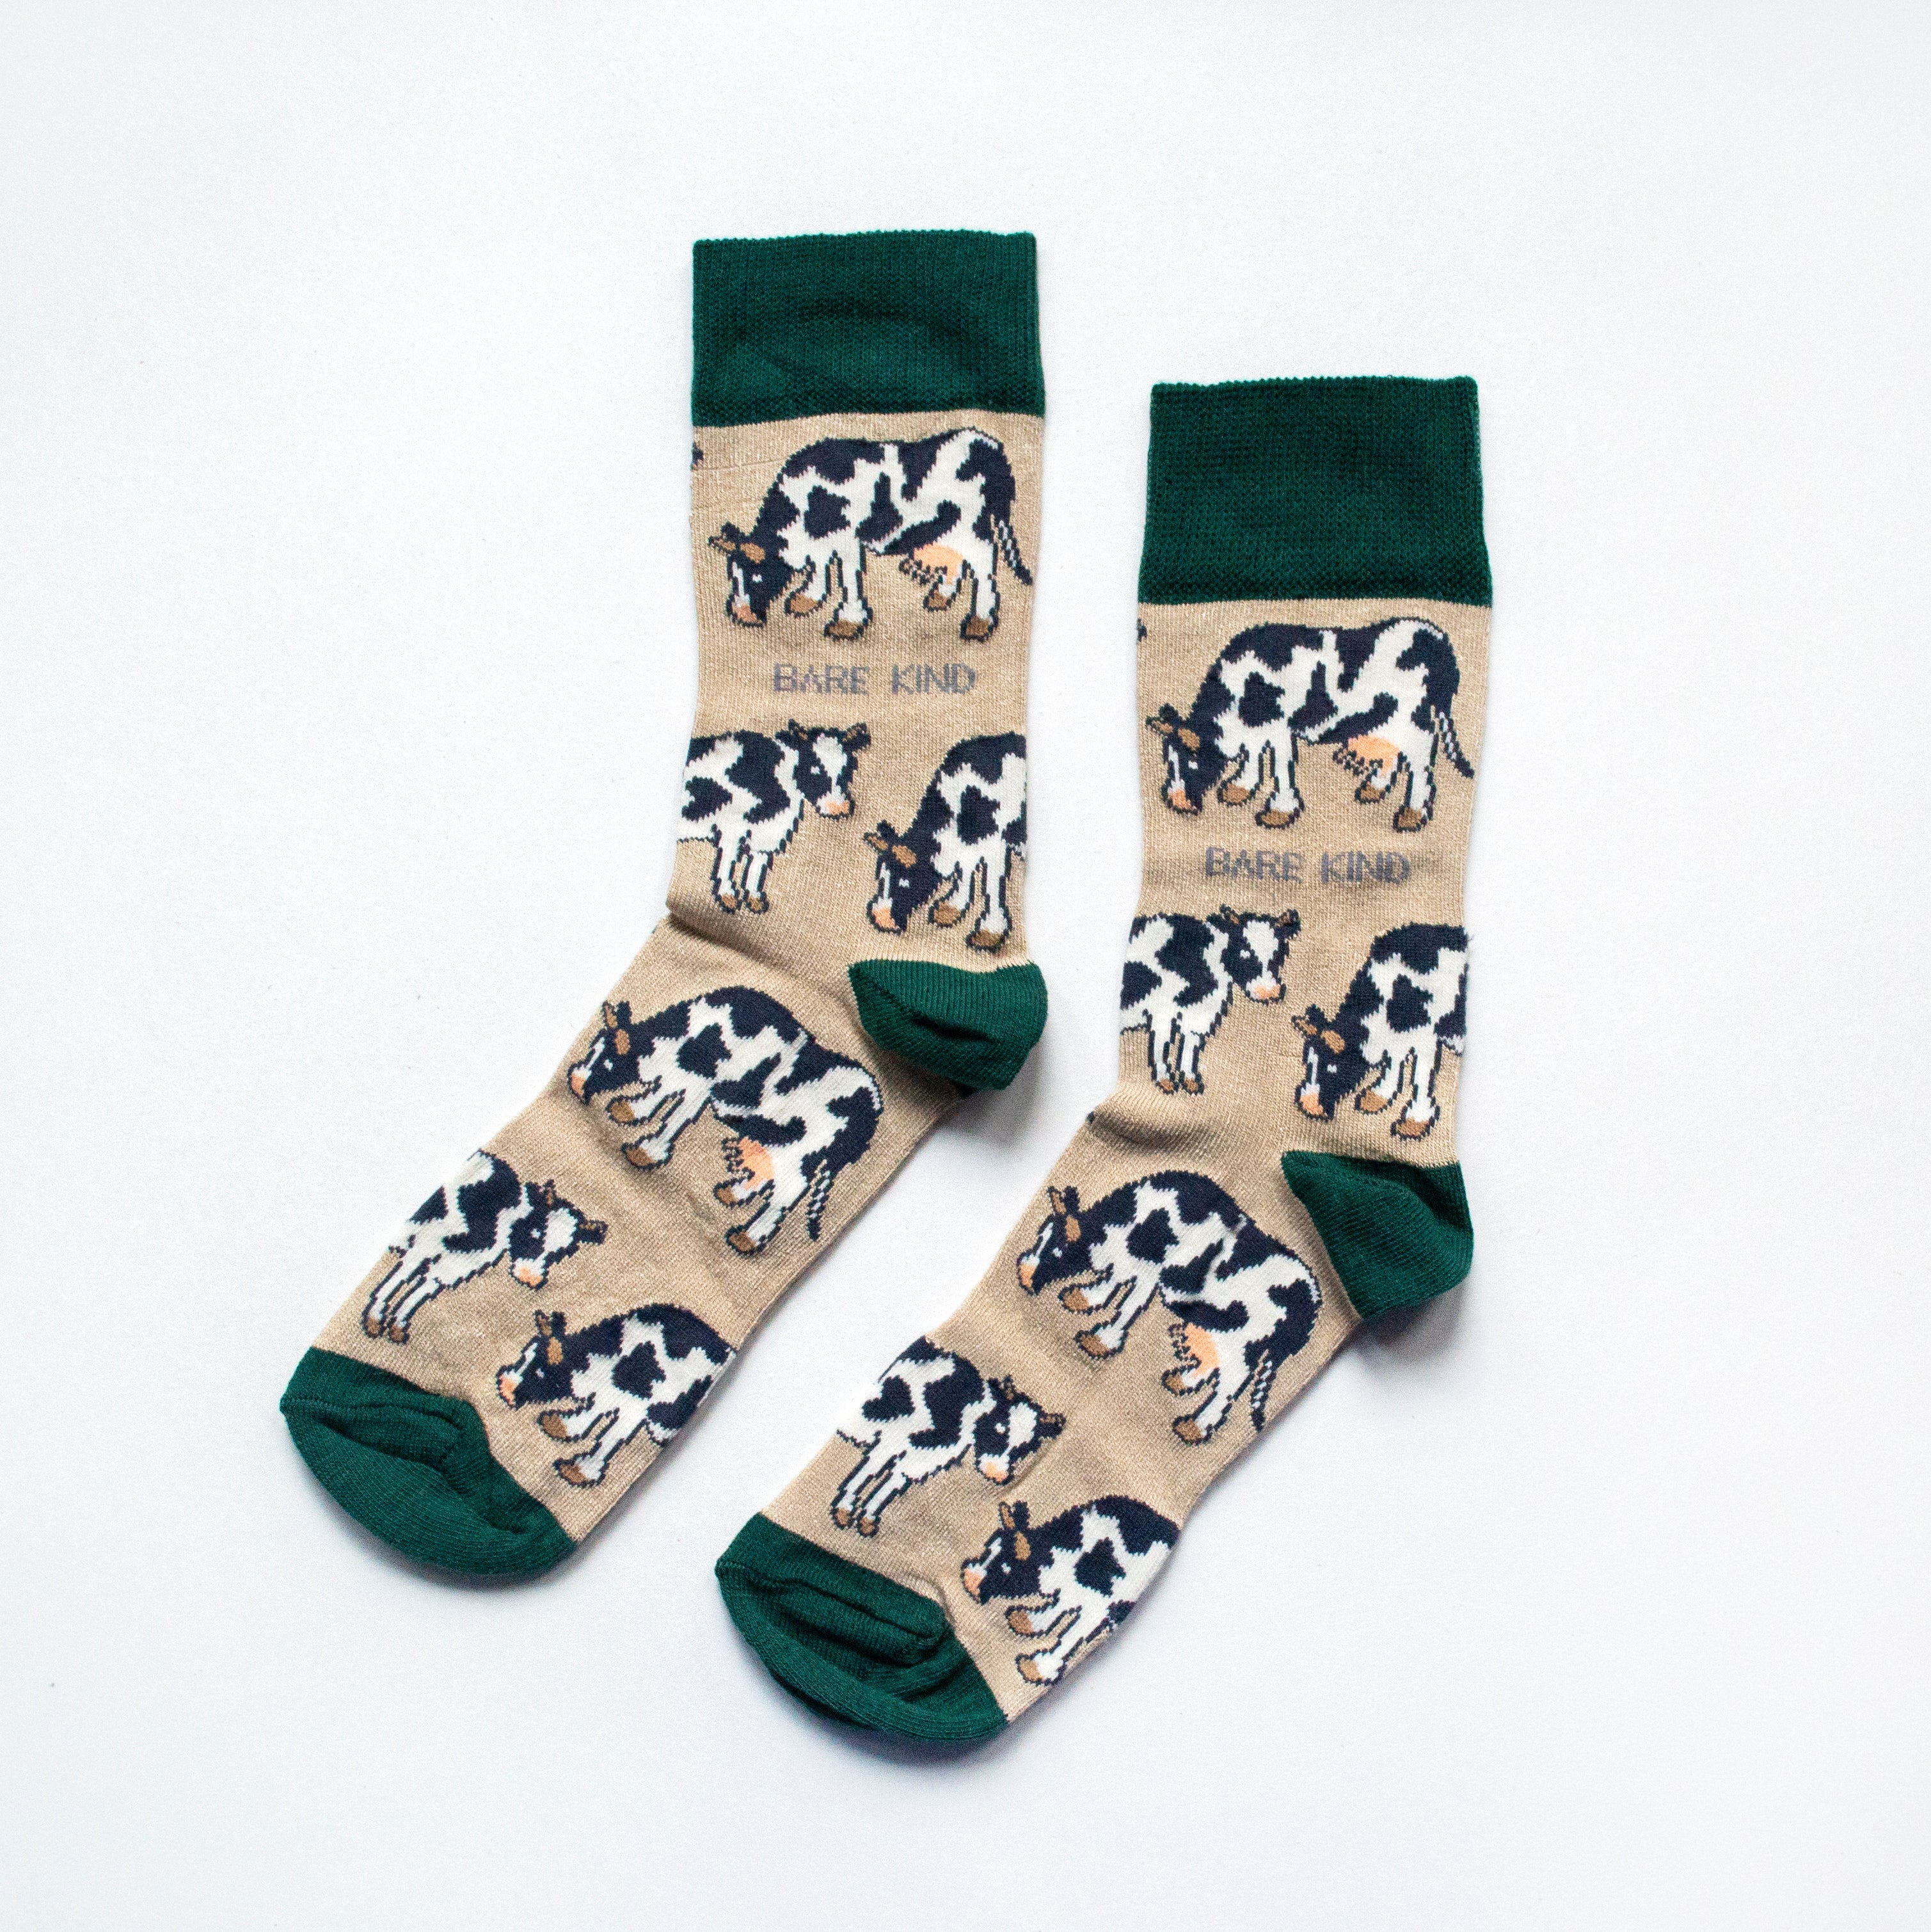 Bare Kind Bamboo Socks - Save the Cows